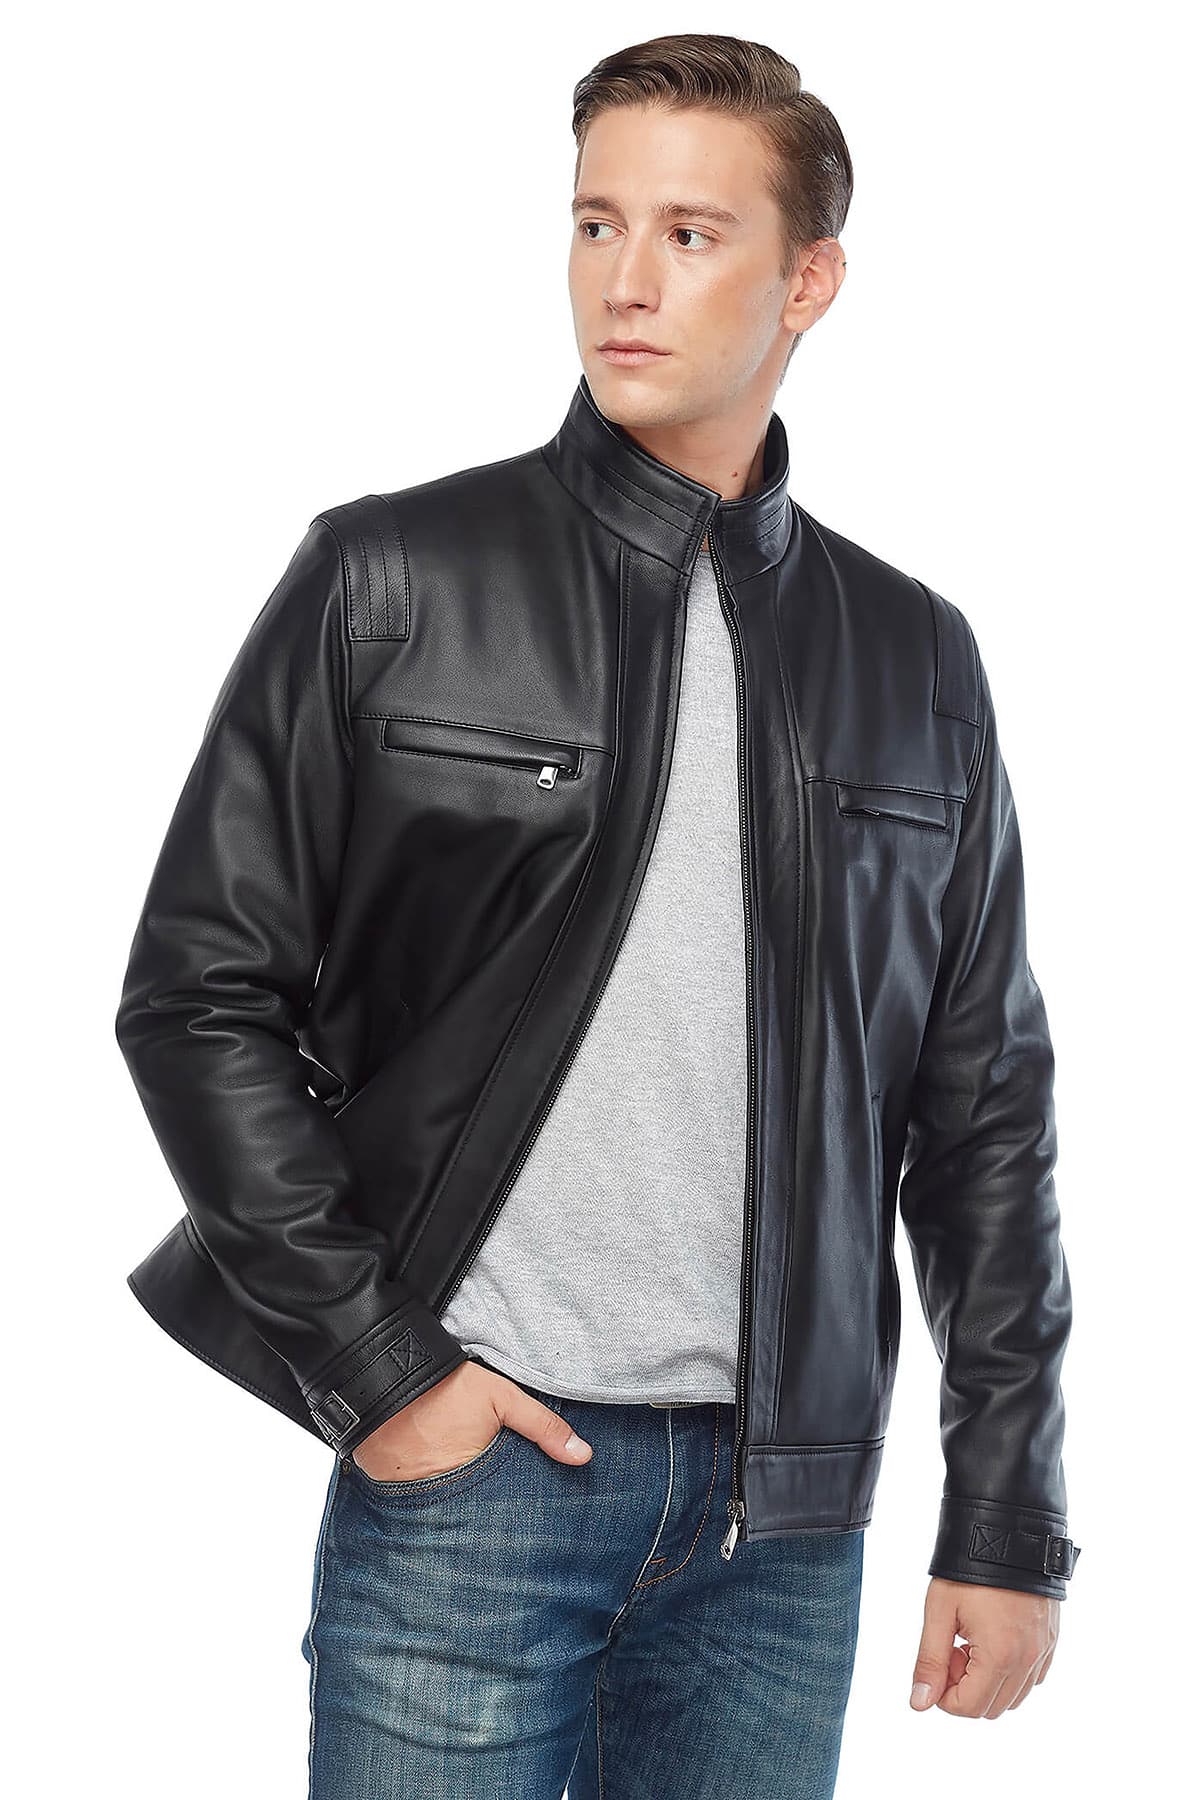 Jesse Wood Men’s Genuine Leather Coat Black3